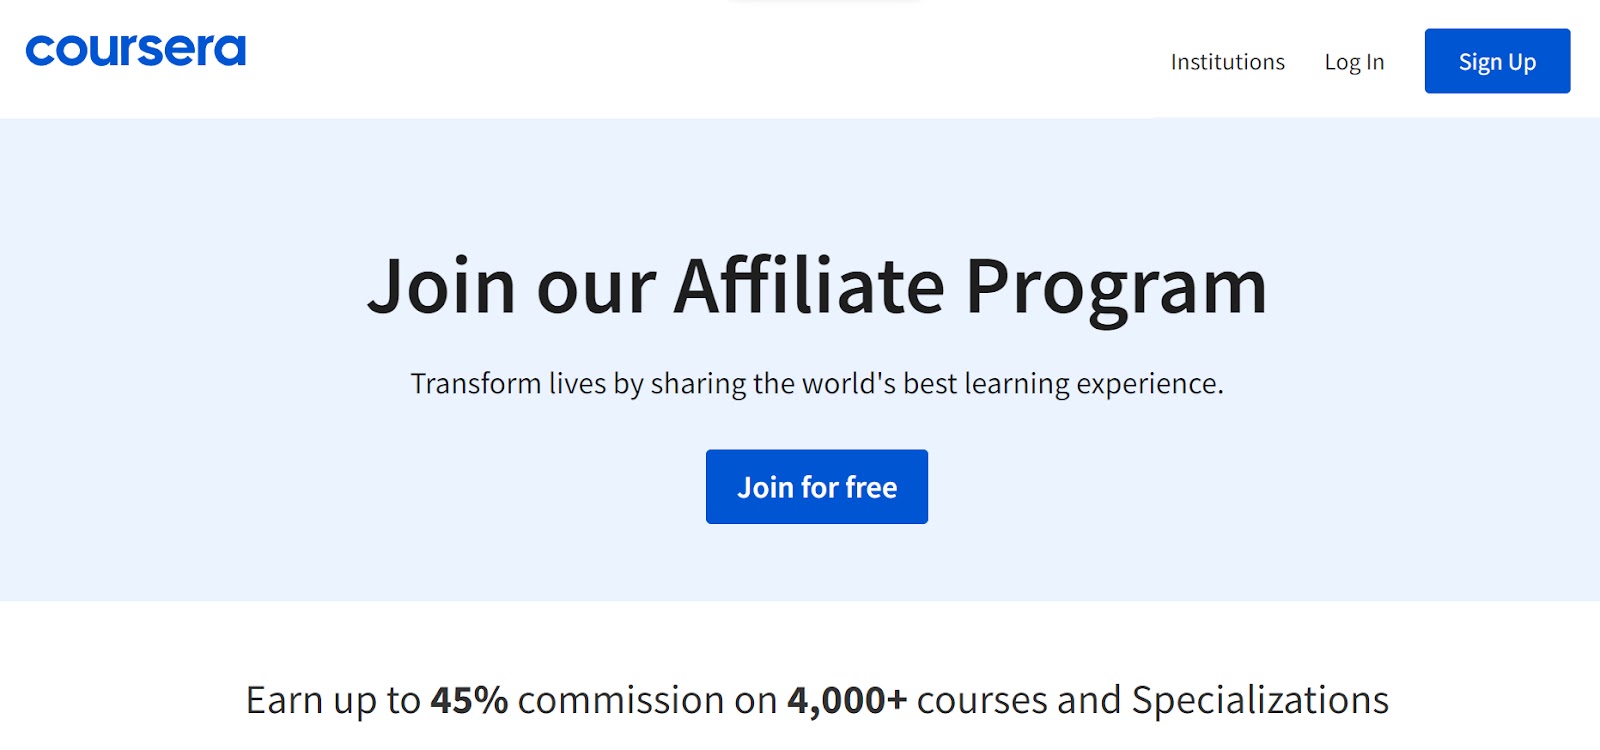 Coursera Affiliate Program landing page